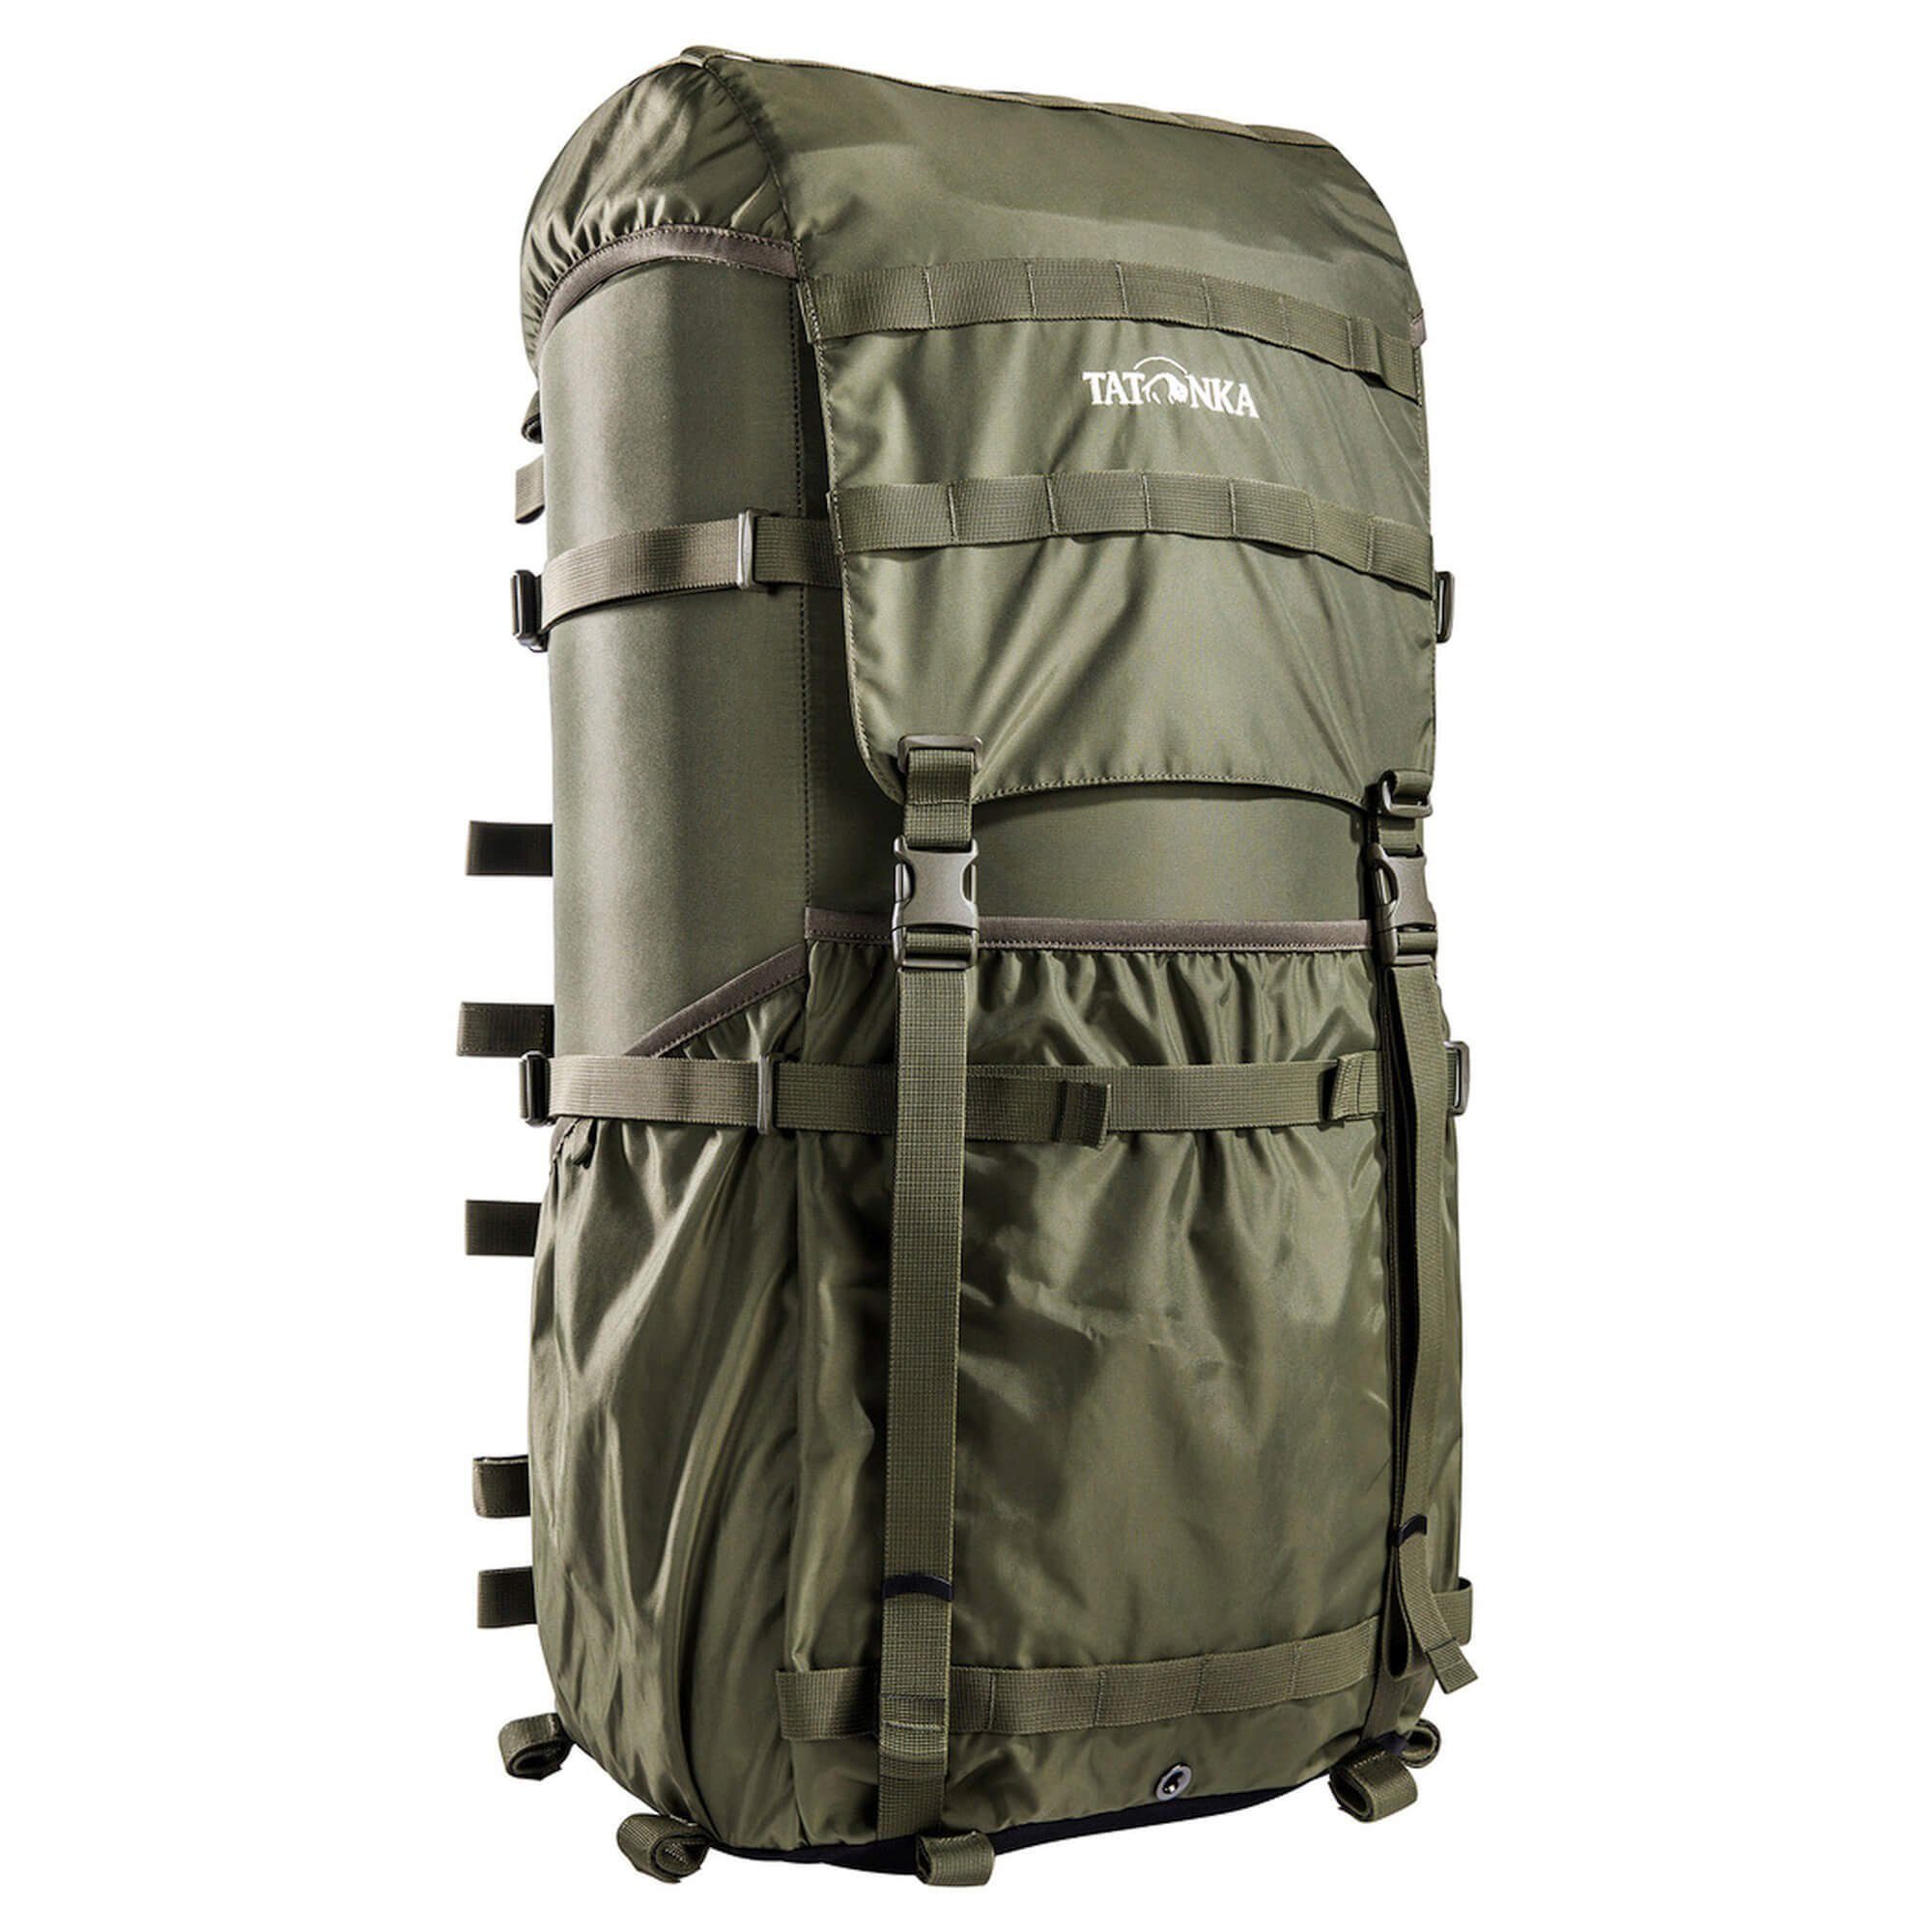 TATONKA® Trekkingrucksack Packsack 2 Lastenkraxe - 66 cm